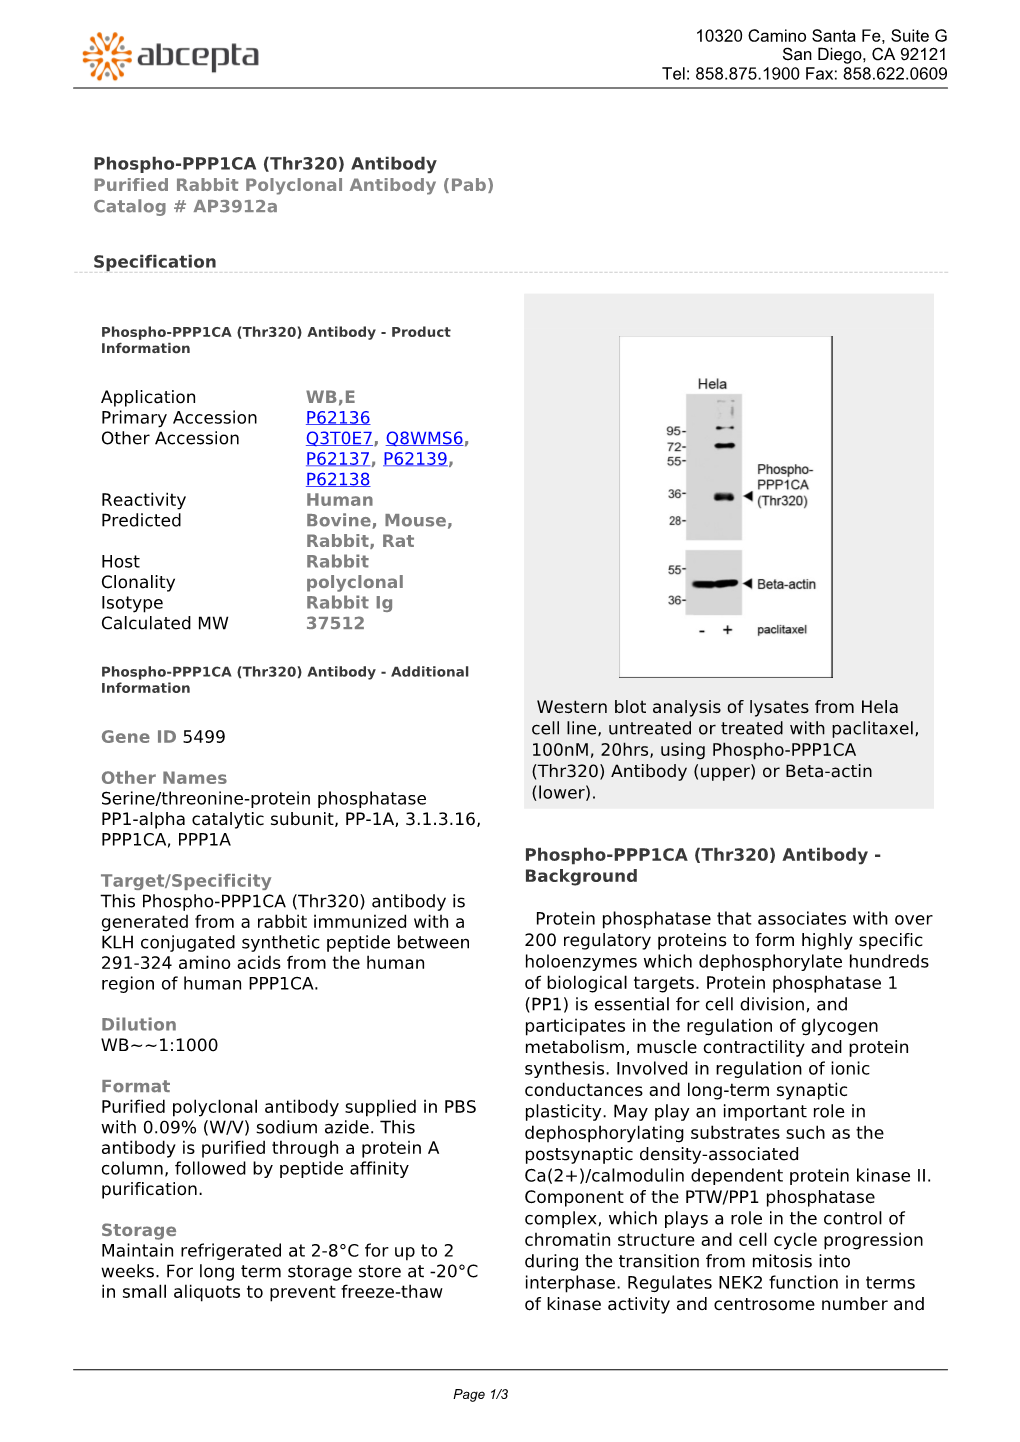 Phospho-PPP1CA (Thr320) Antibody Purified Rabbit Polyclonal Antibody (Pab) Catalog # Ap3912a